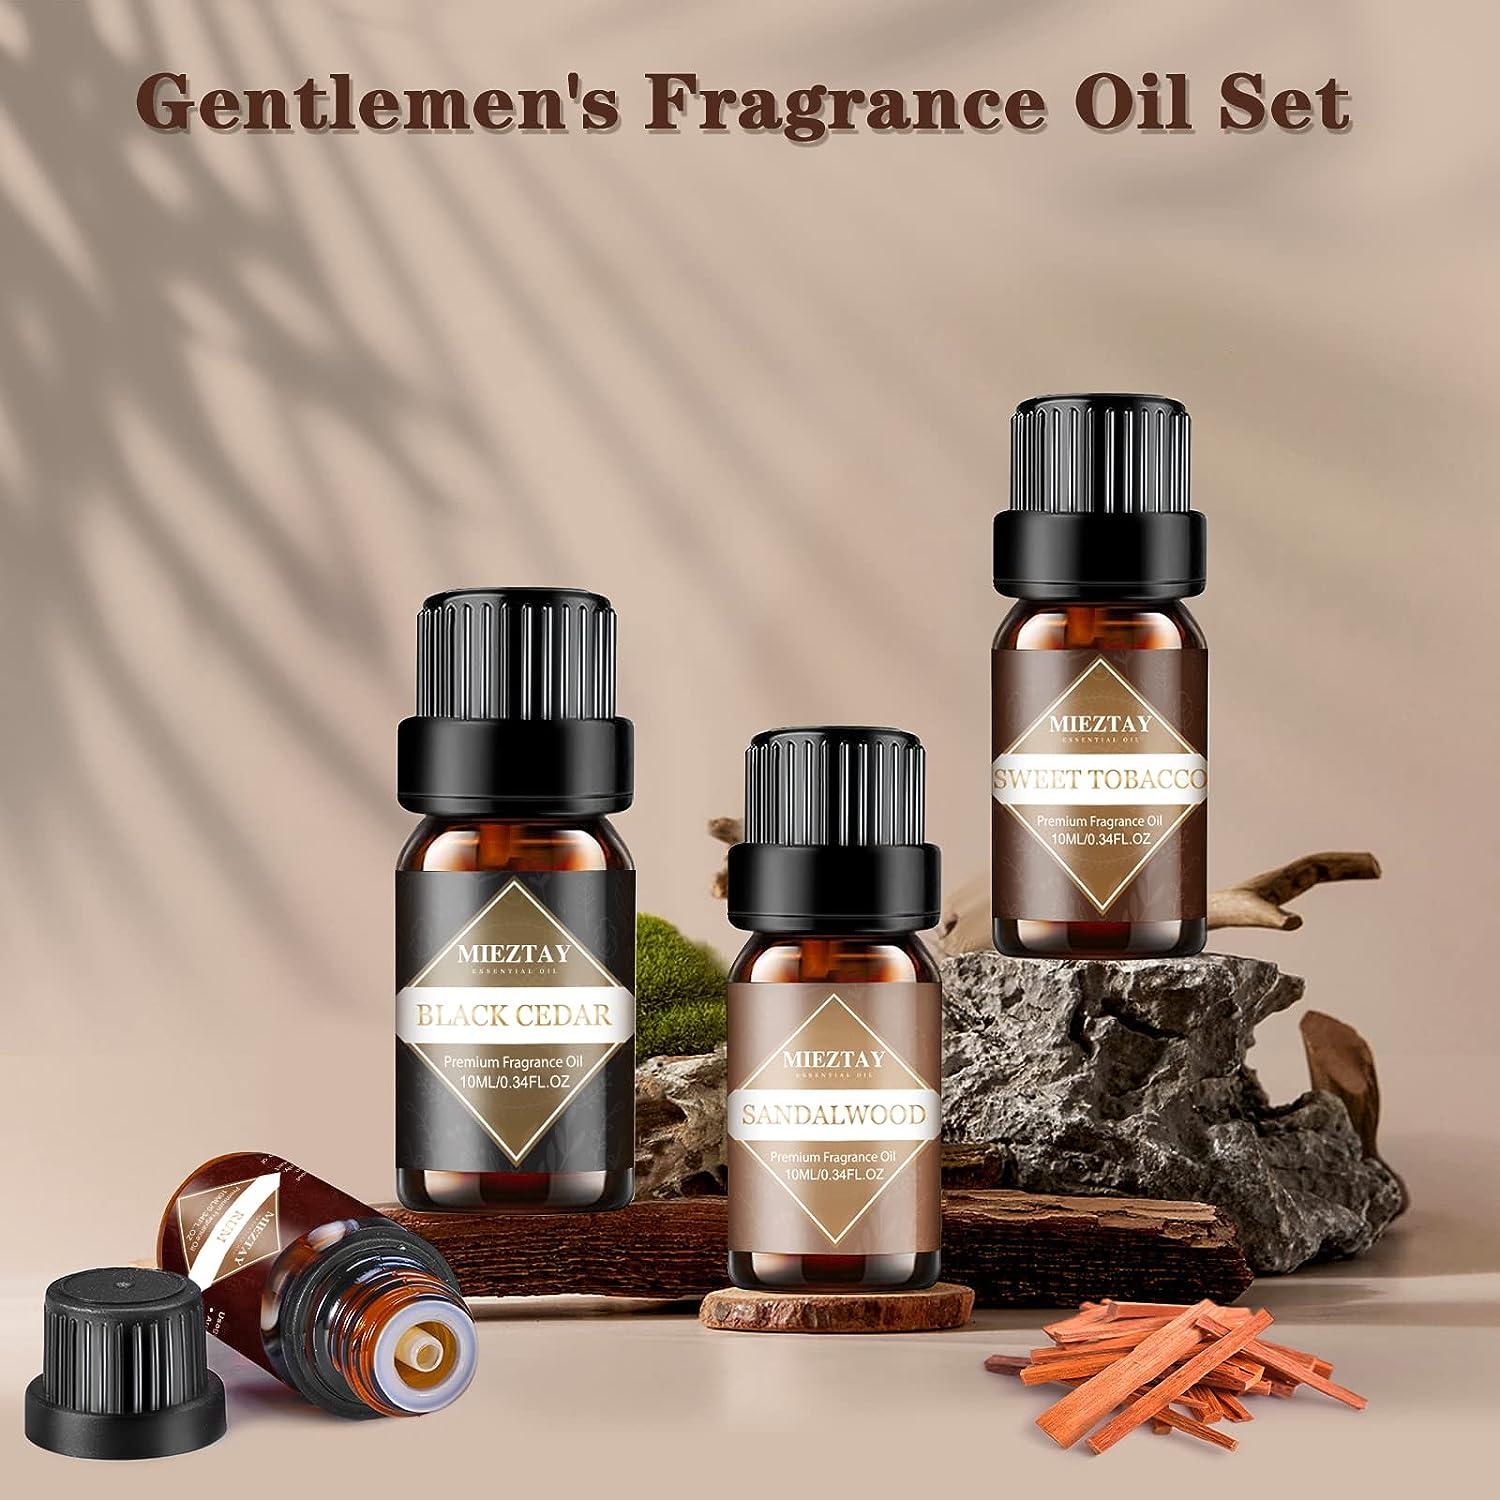 Unique Oils Cedar Leather Fragrance Oil 8 oz Standard